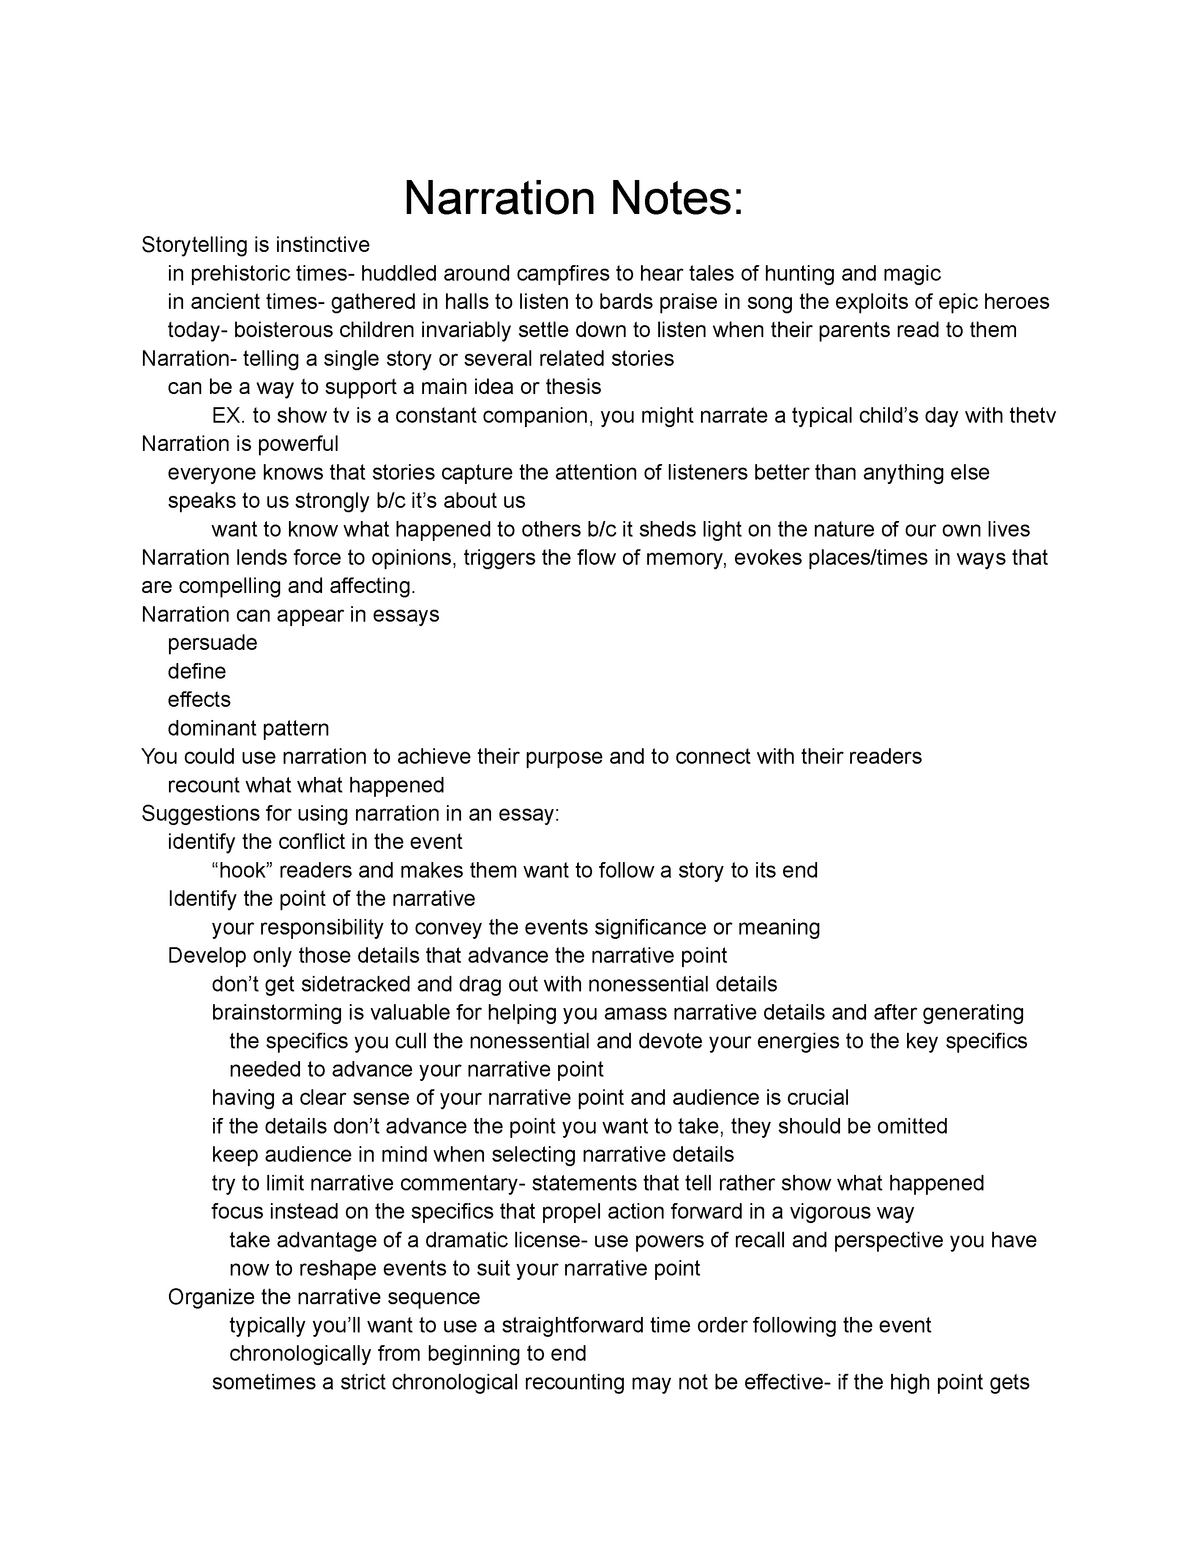 ENGL 1050 - Narration Notes - Narration Notes: Storytelling is ...